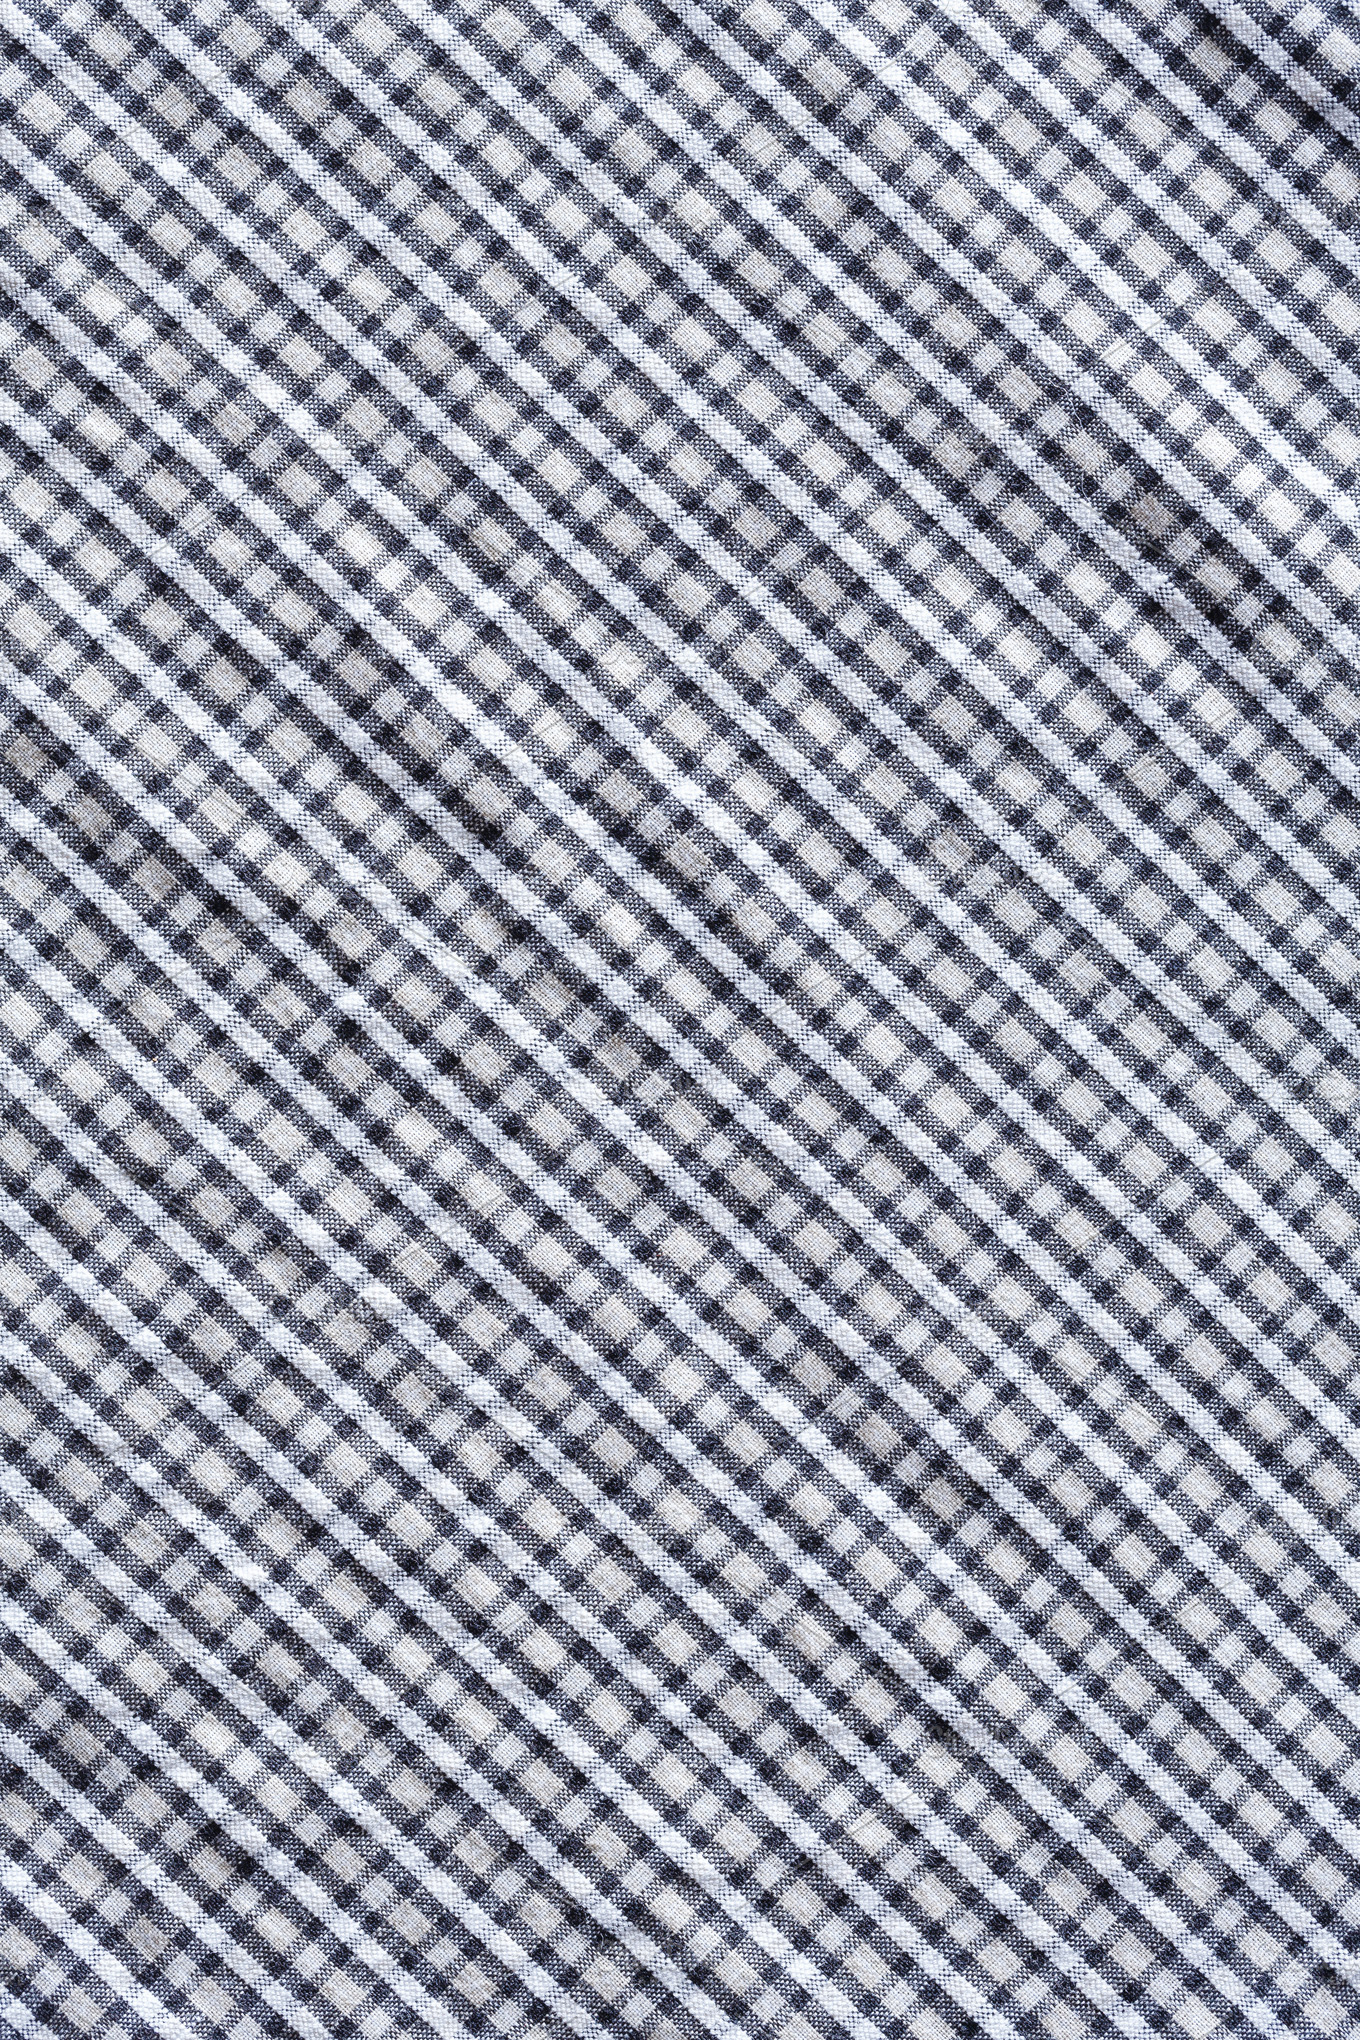 Checkerboard pattern cloth texture ~ Photos ~ Creative Market